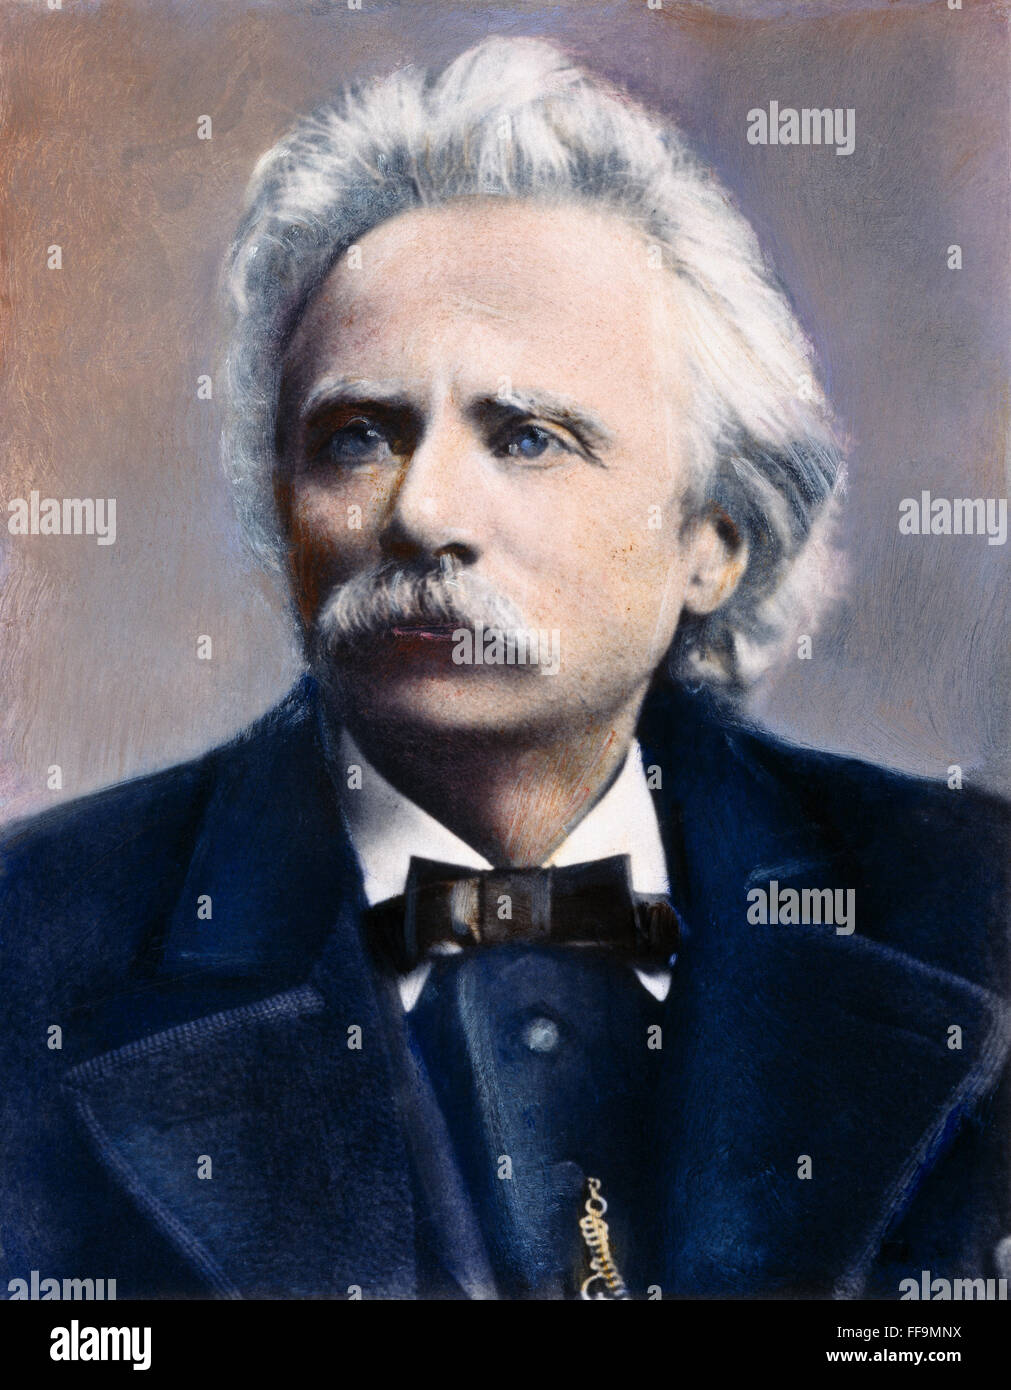 EDVARD GRIEG (1843-1907). /nNorwegian composer. Oil over a photograph, n.d. Stock Photo